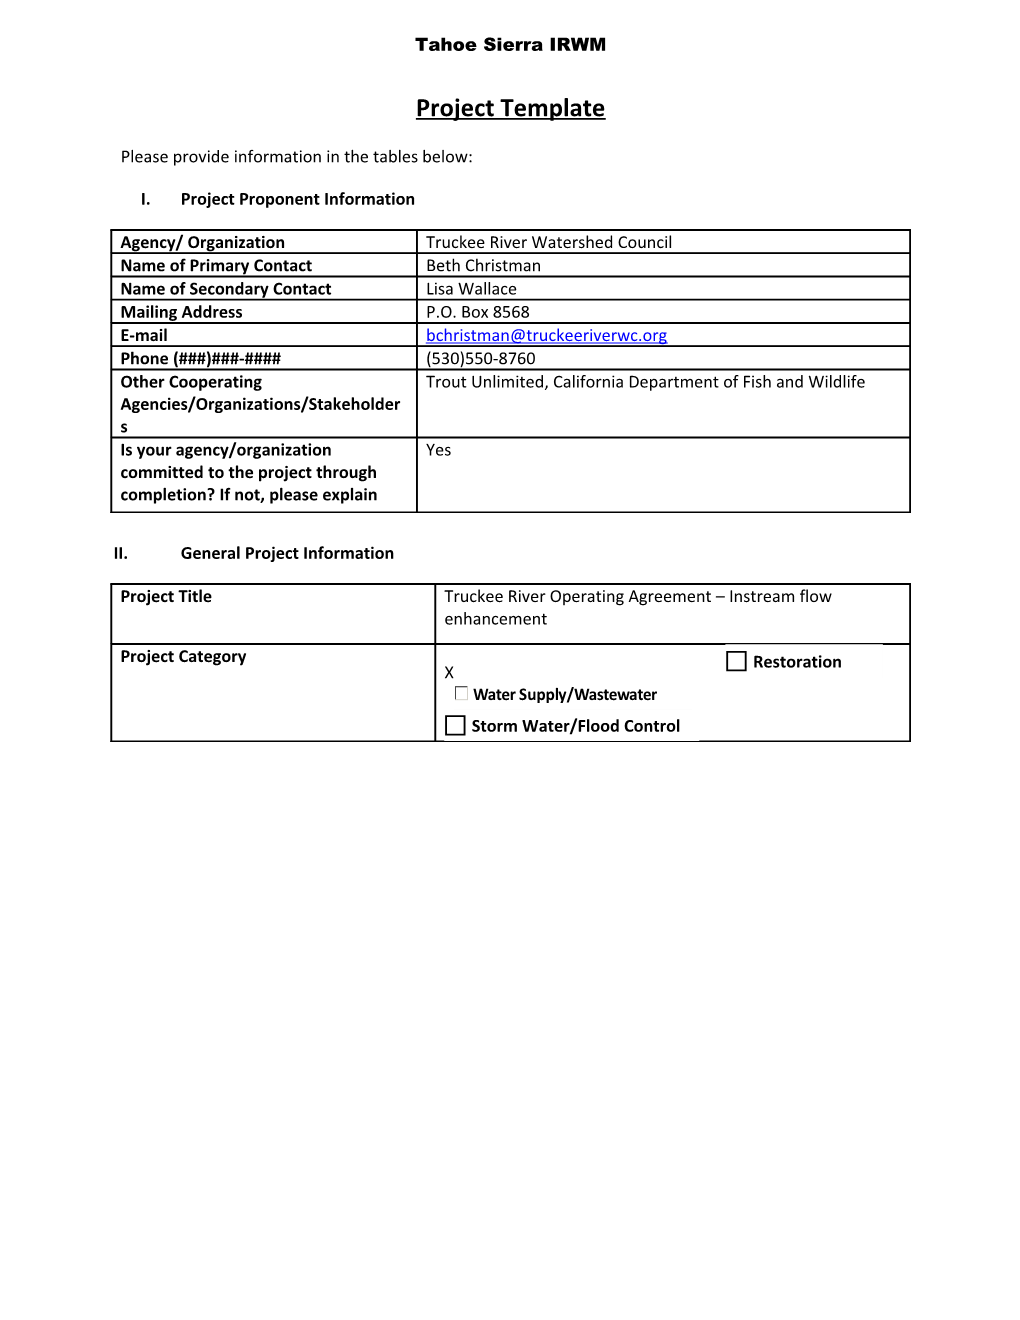 Handout 2 Project Information Form